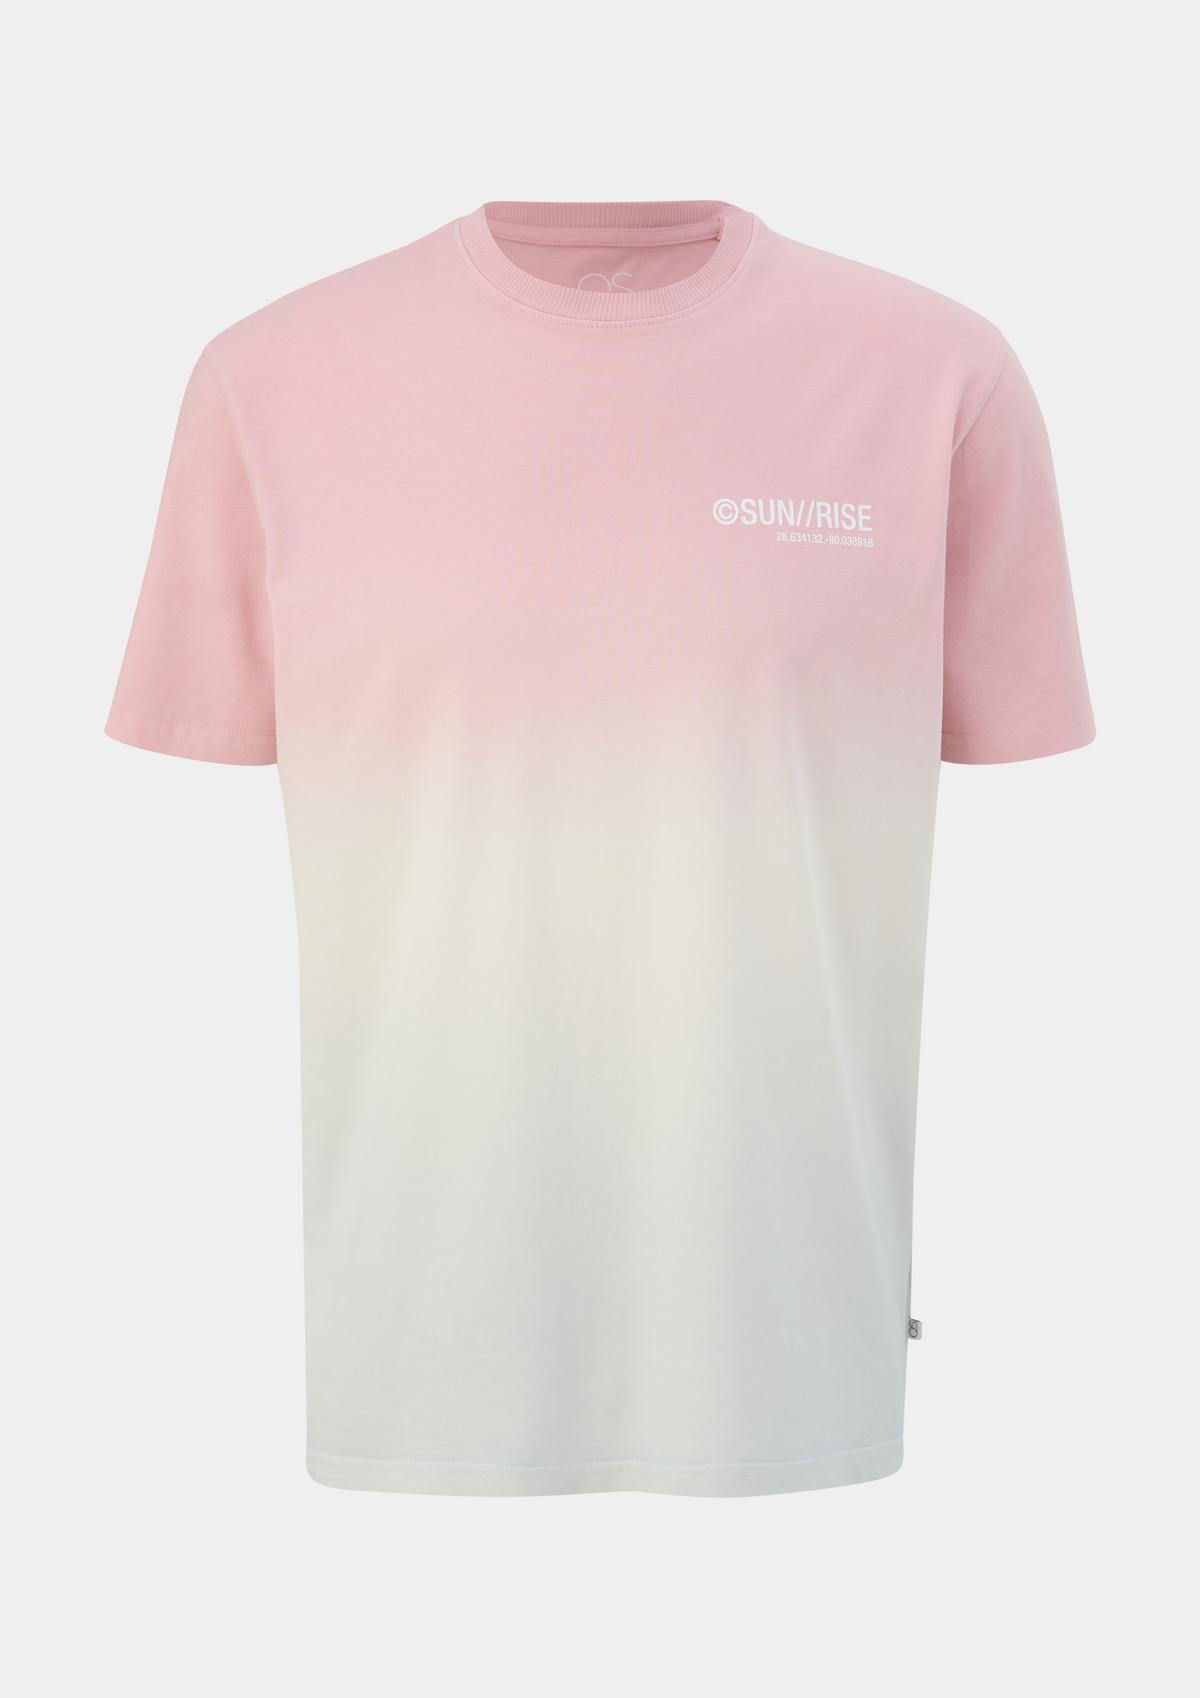 Baumwollshirt mit rosa - Farbverlauf